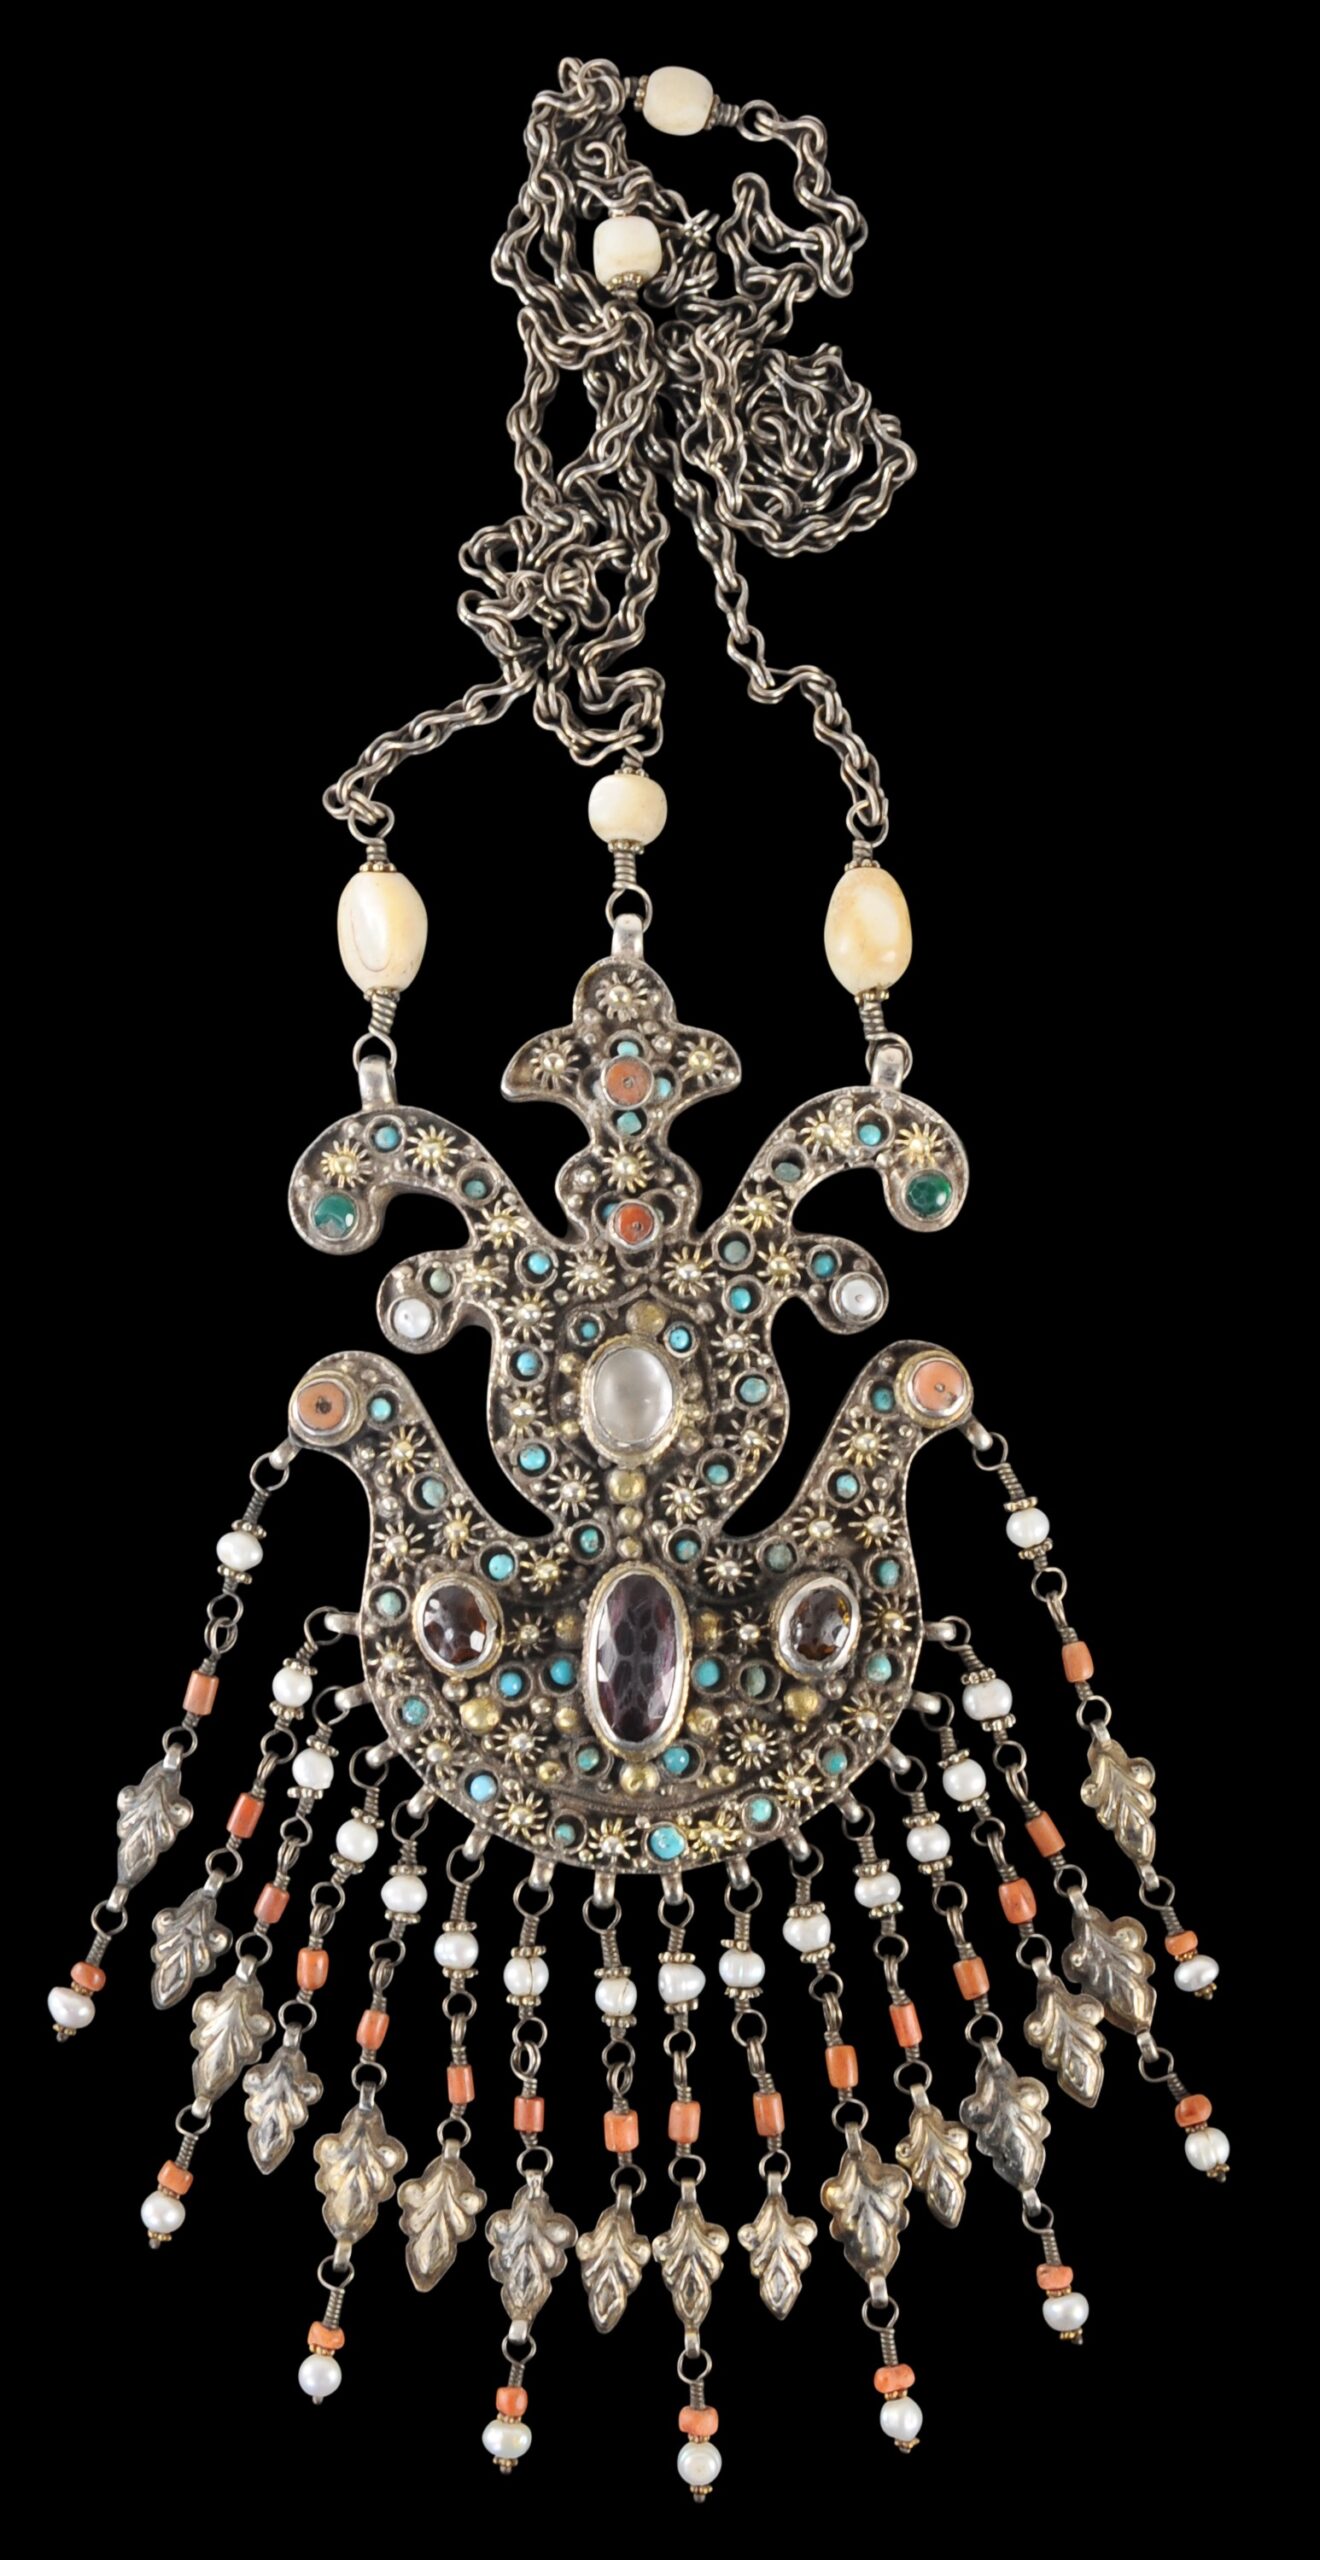 Uzbek Silver Necklace with Pearls & Gems - Michael Backman Ltd